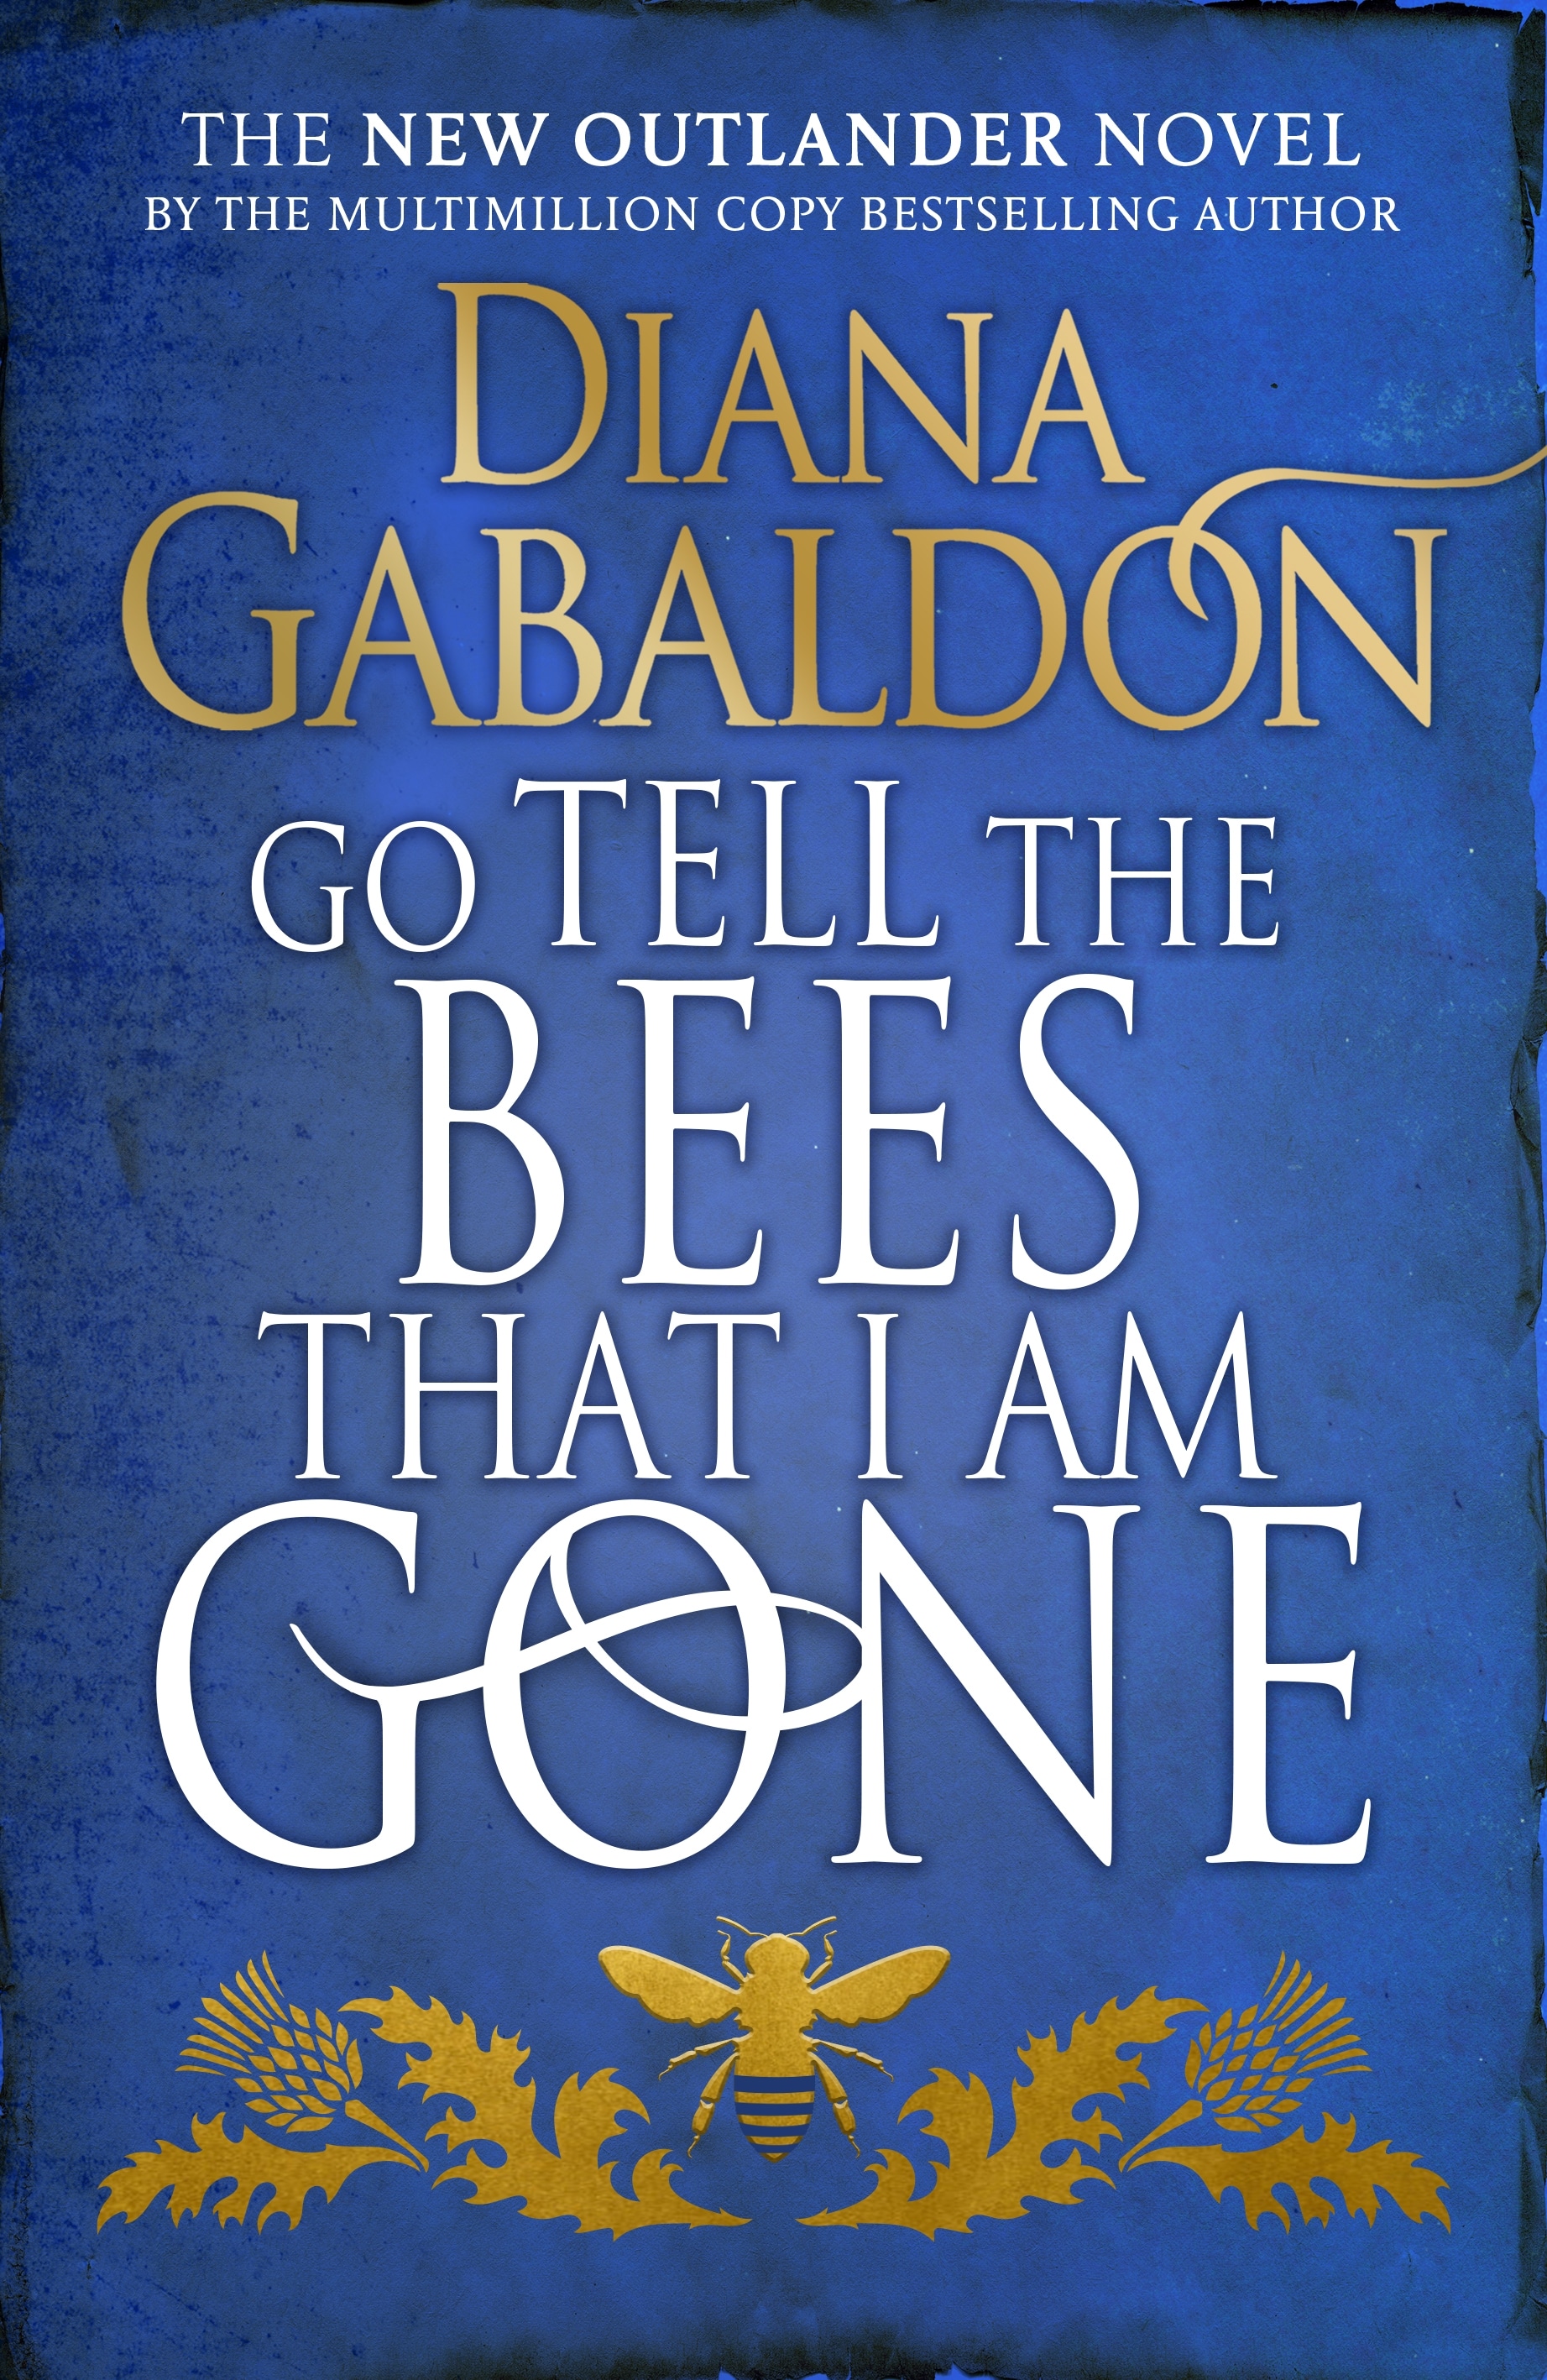 Book “Go Tell the Bees that I am Gone” by Diana Gabaldon — November 23, 2021